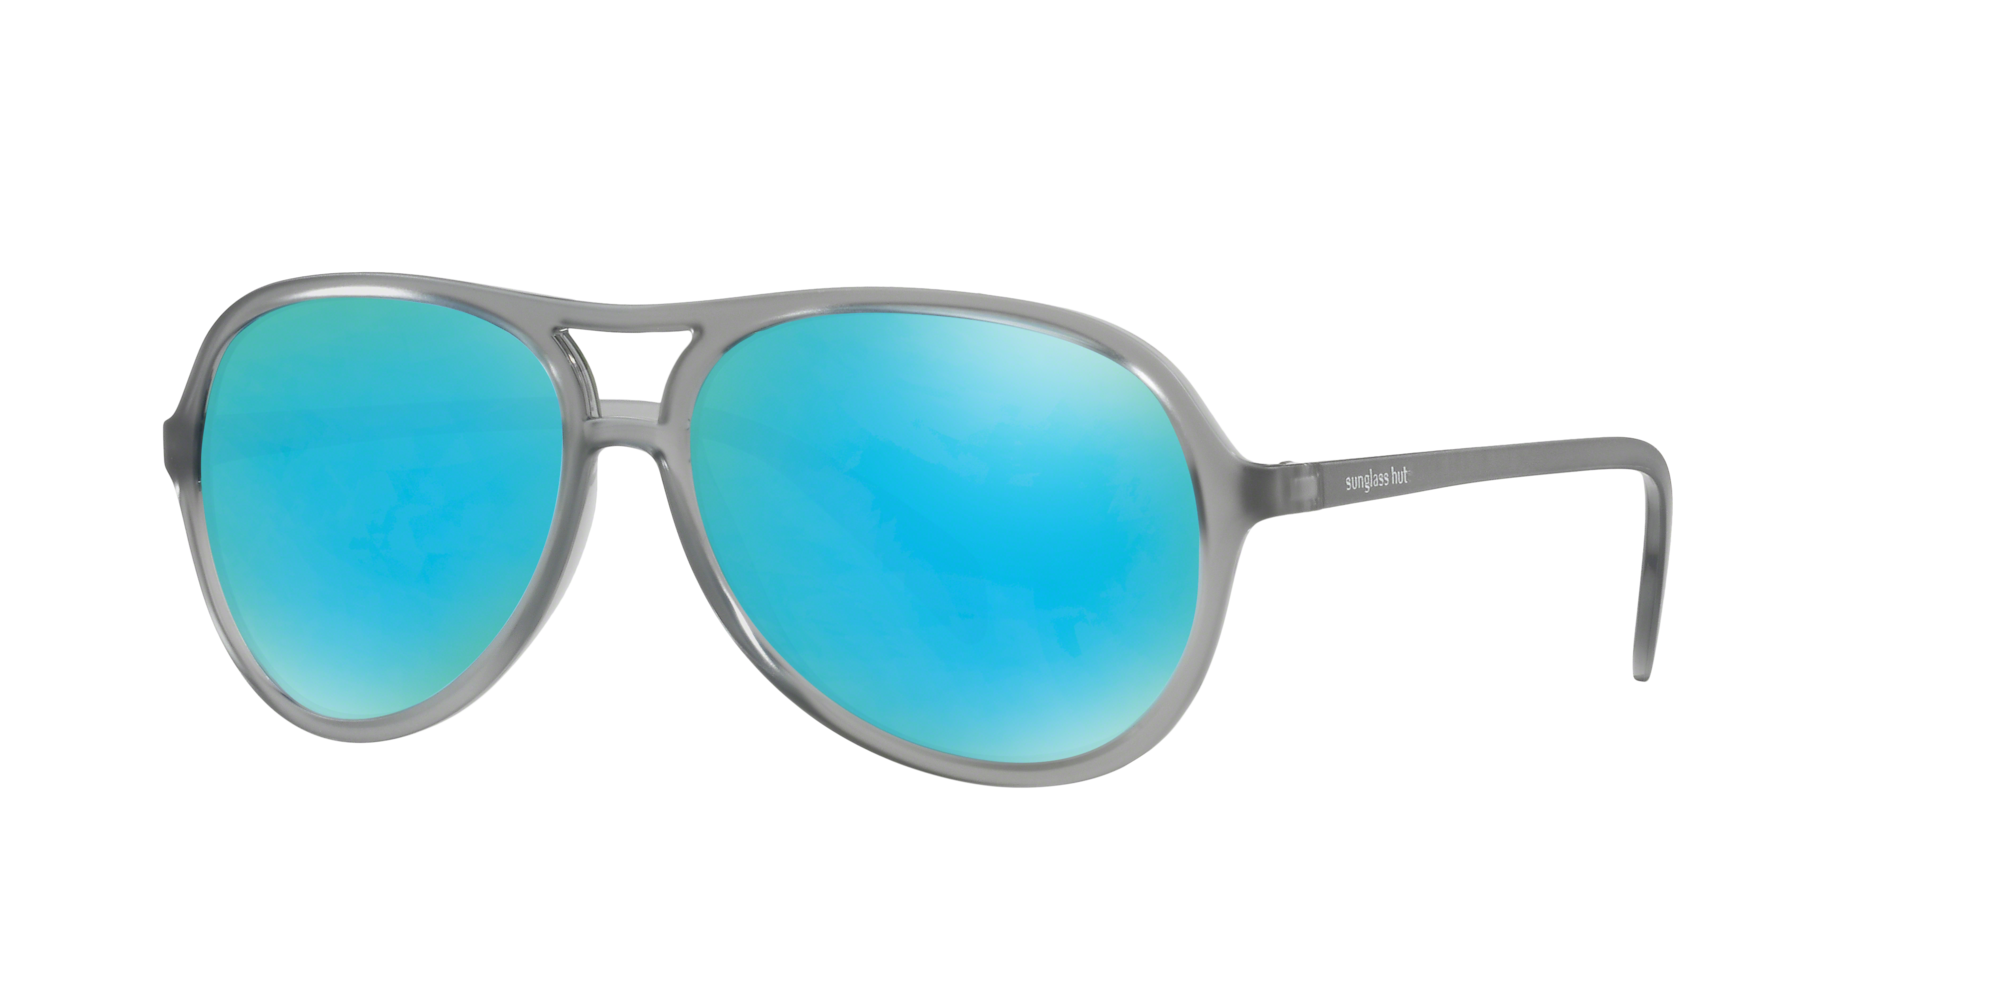 Sunglass Hut at Galleria Punjagutta: Find Your Perfect Pair of Stylish  Sunglasses